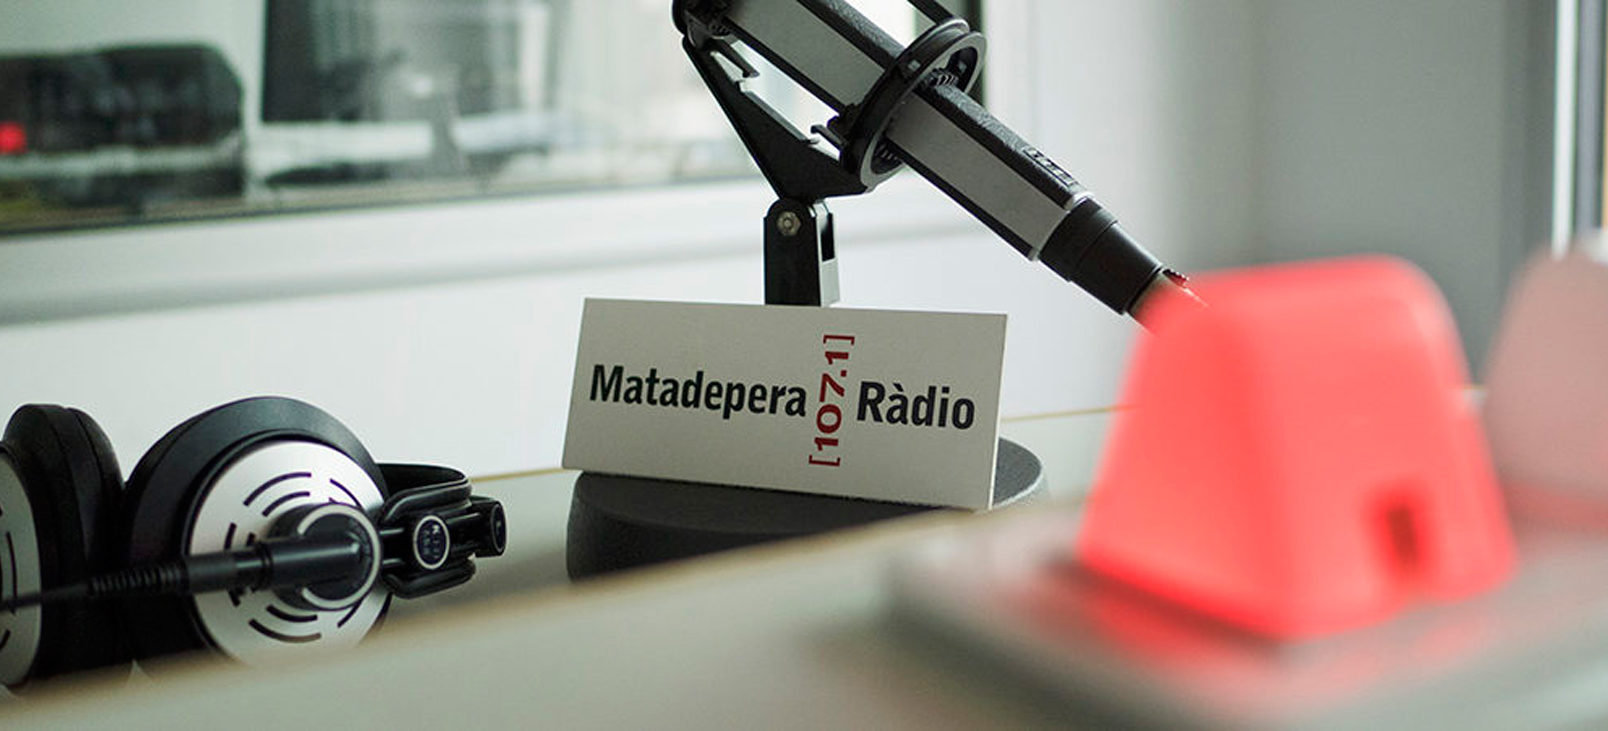 MatadeperaRadio